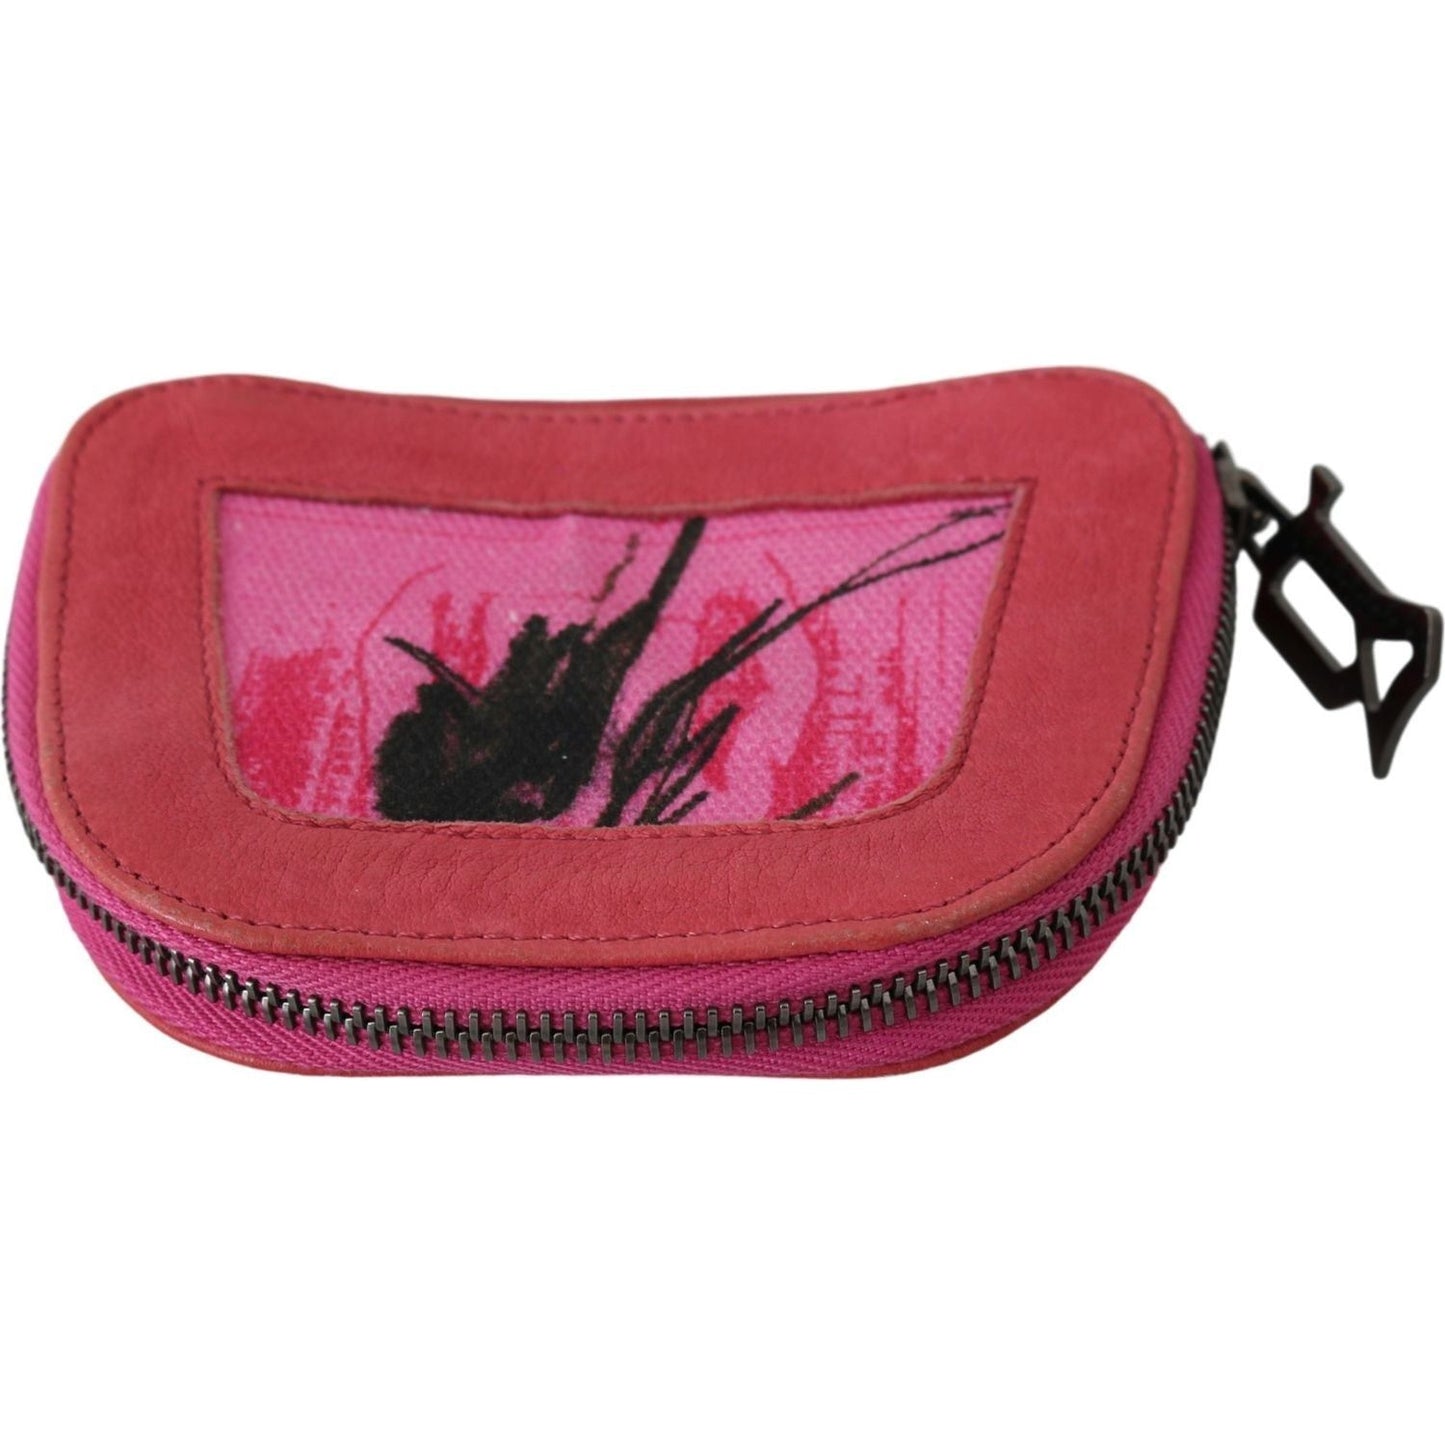 PINKO Elegant Pink Fabric Coin Wallet Purse pink-suede-printed-coin-holder-women-fabric-zippered-purse IMG_0184-a9de1b88-8ec.jpg